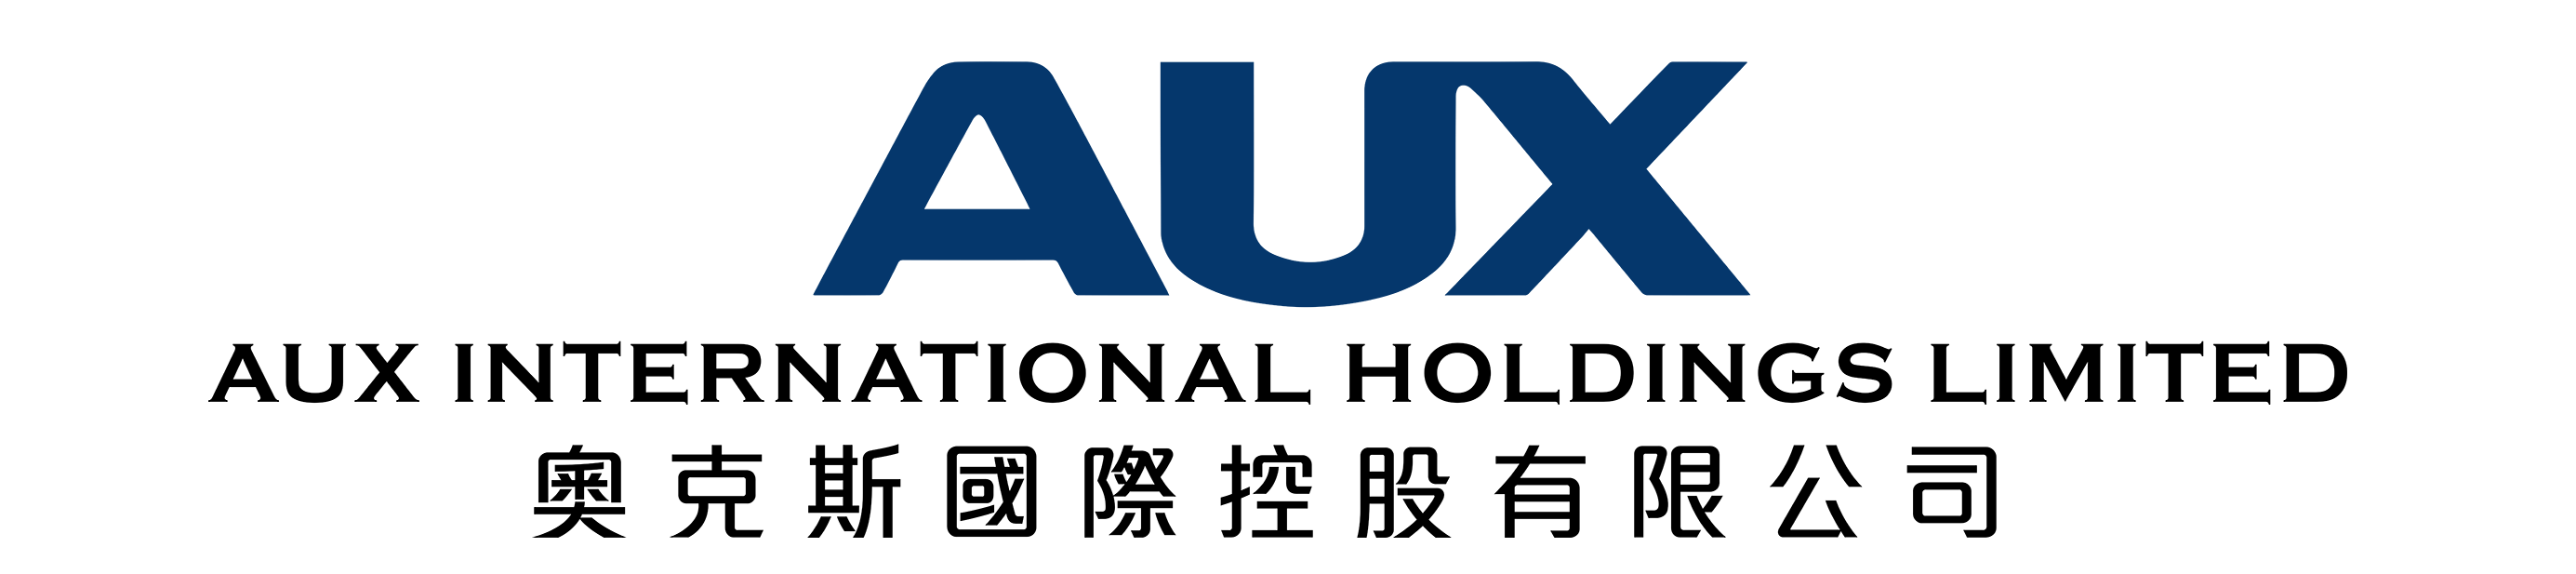 Aux Logo - AUX International Holdings Limited